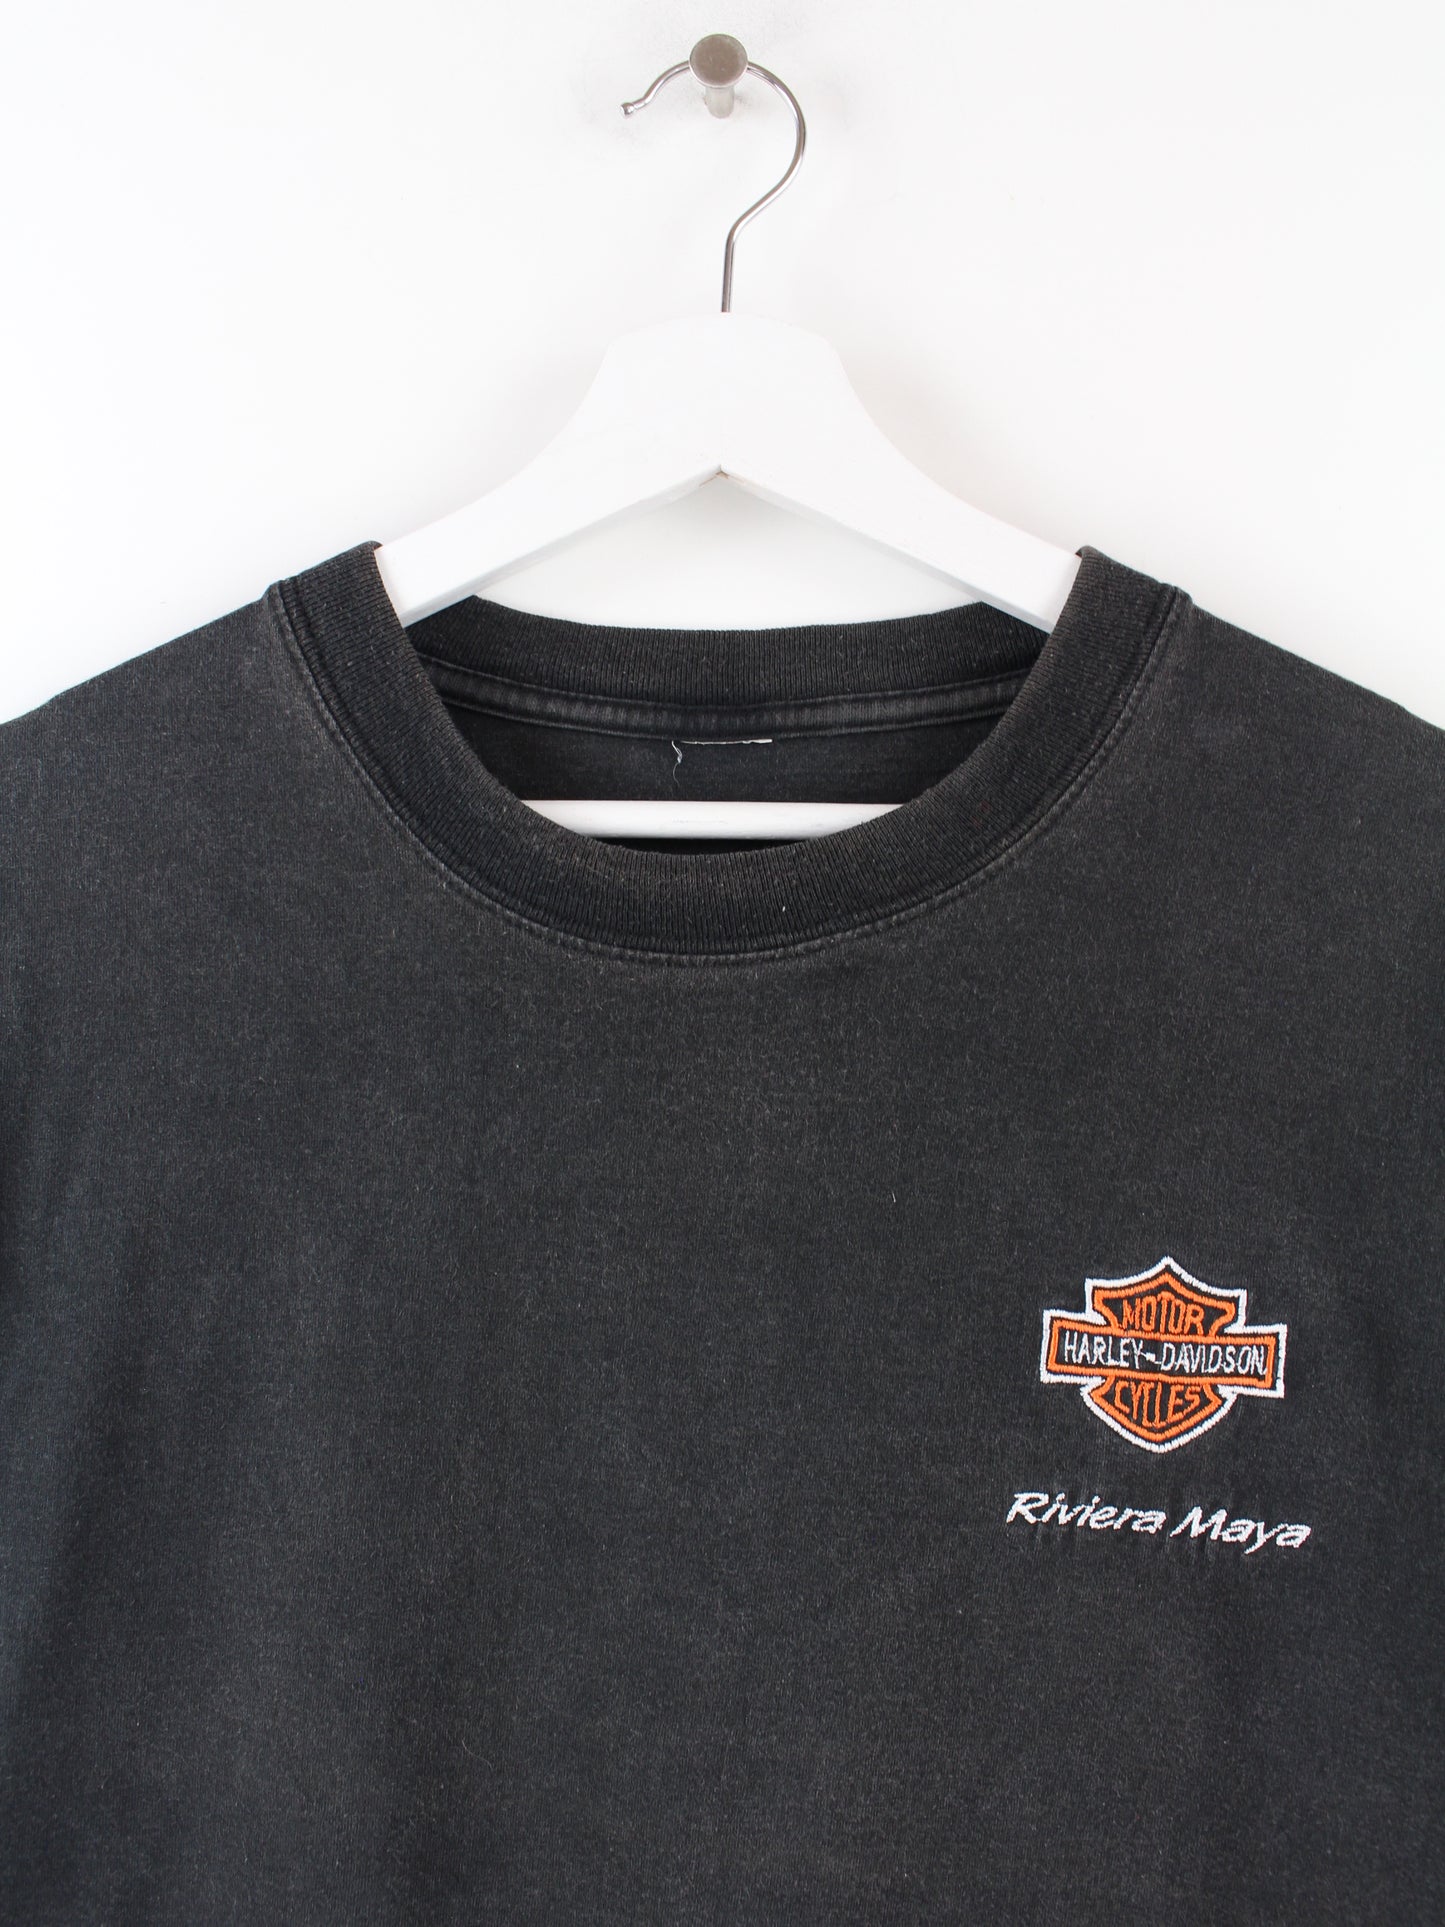 Harley Davidson Embroidered T-Shirt Black XL